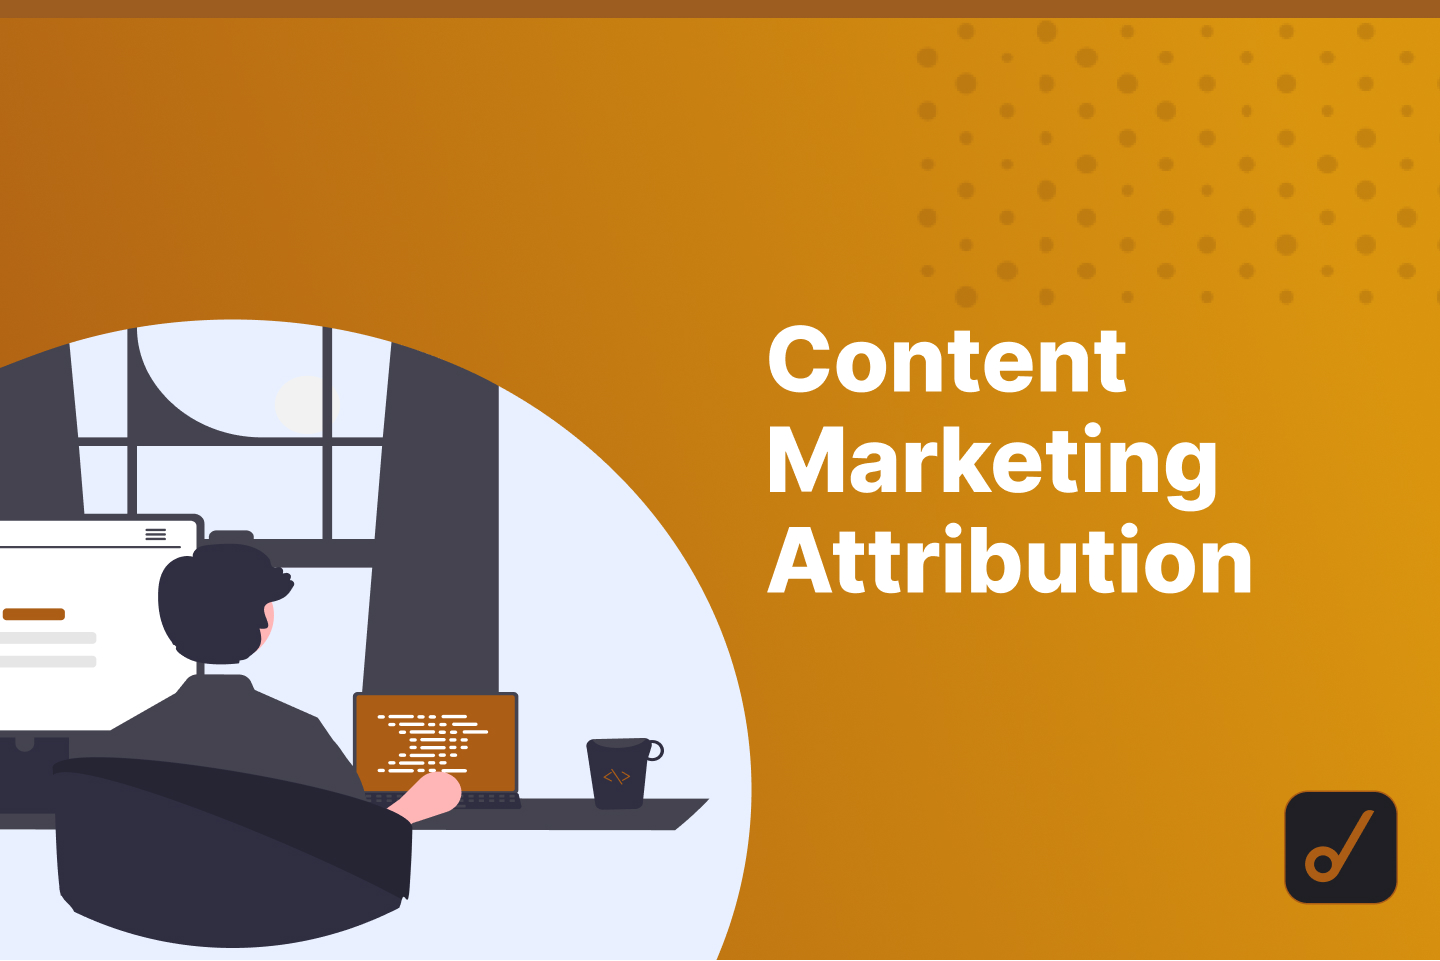 Content Marketing Attribution